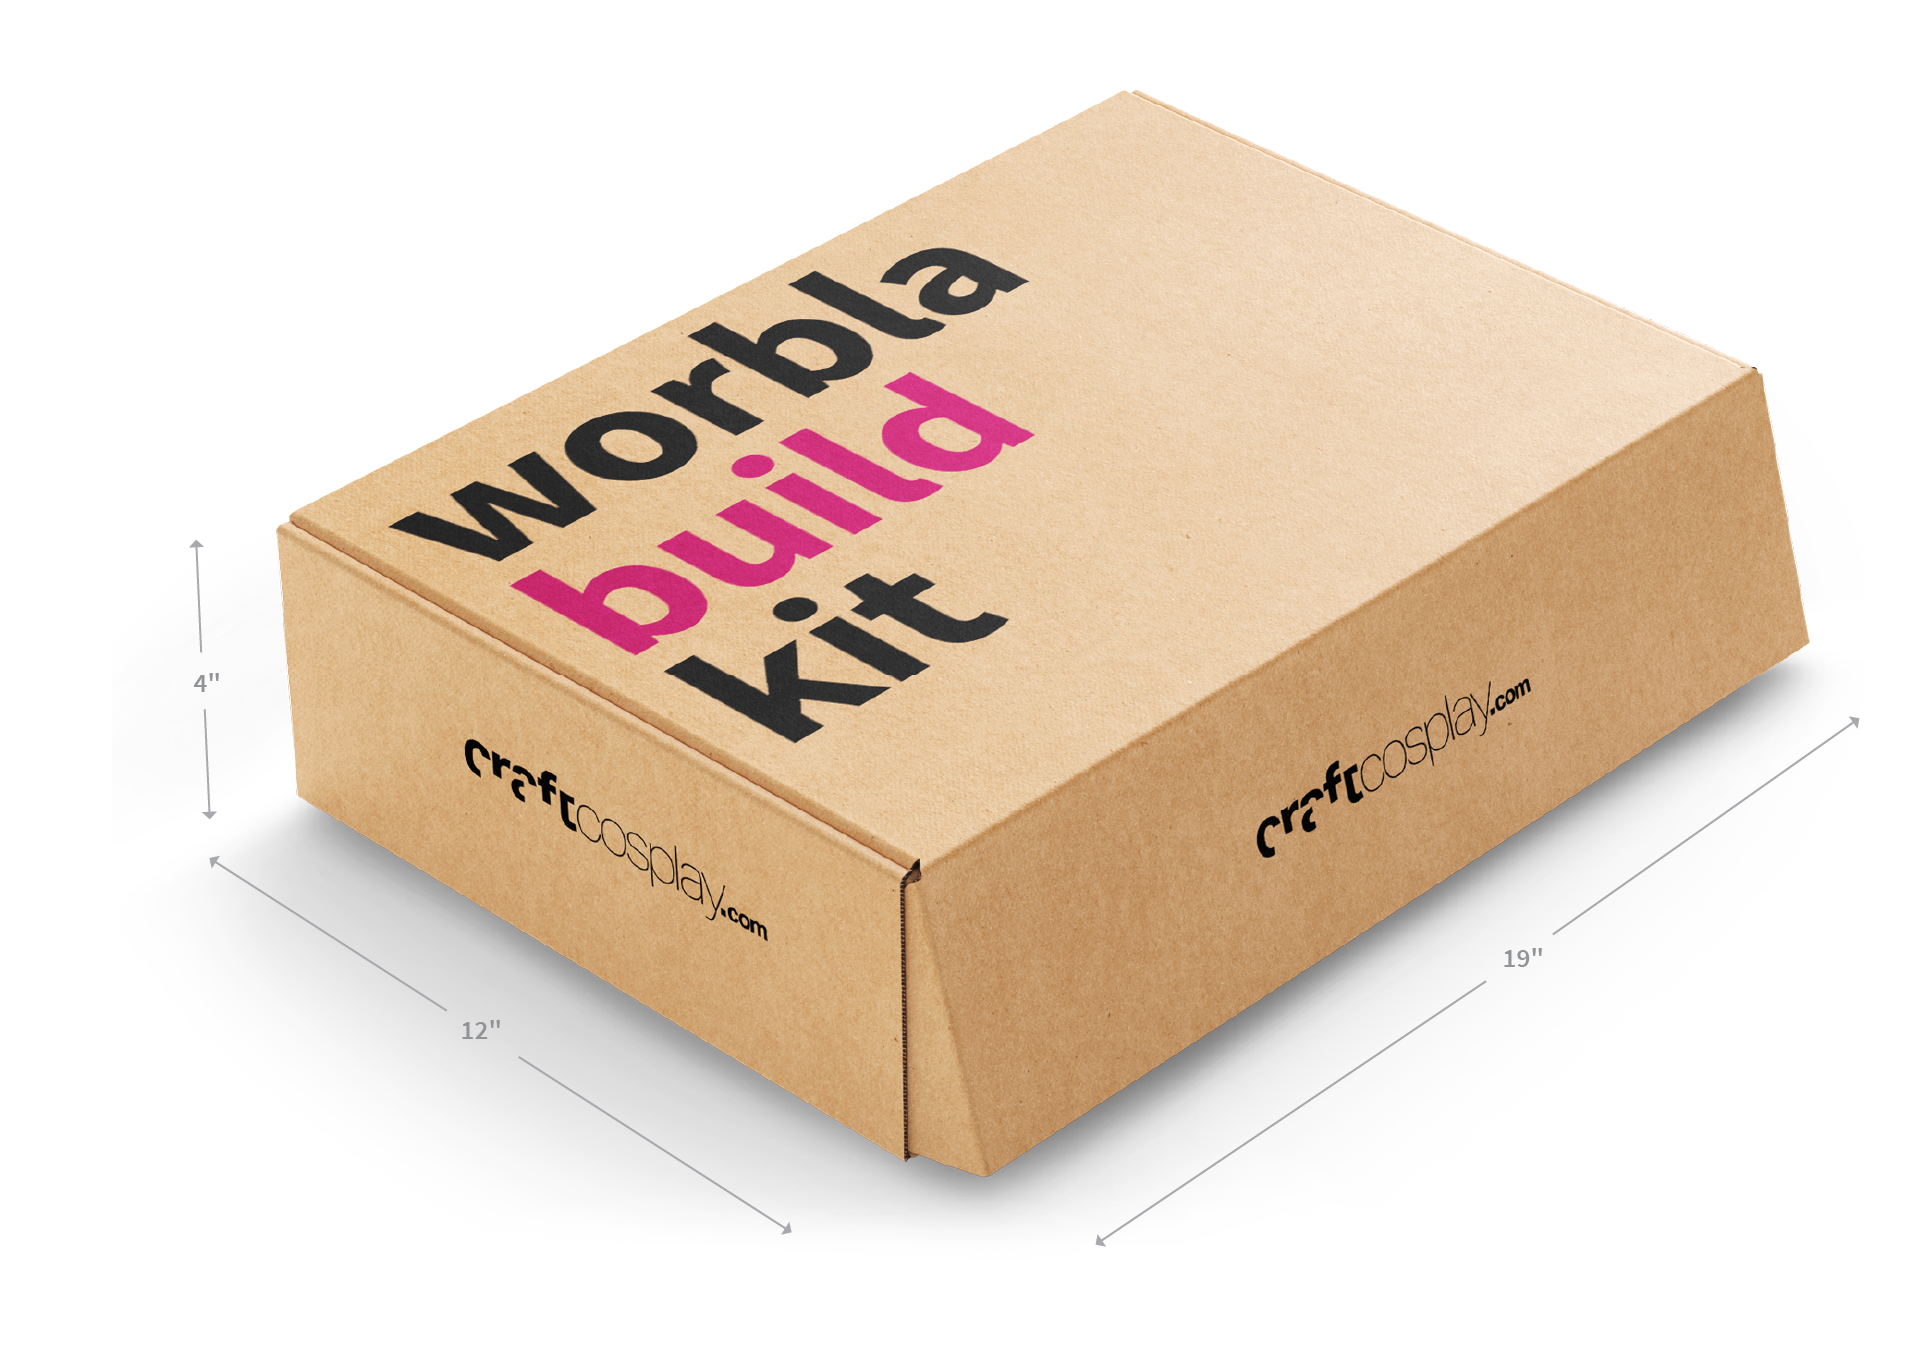 CraftCosplay Worbla Build Kit Dimensions